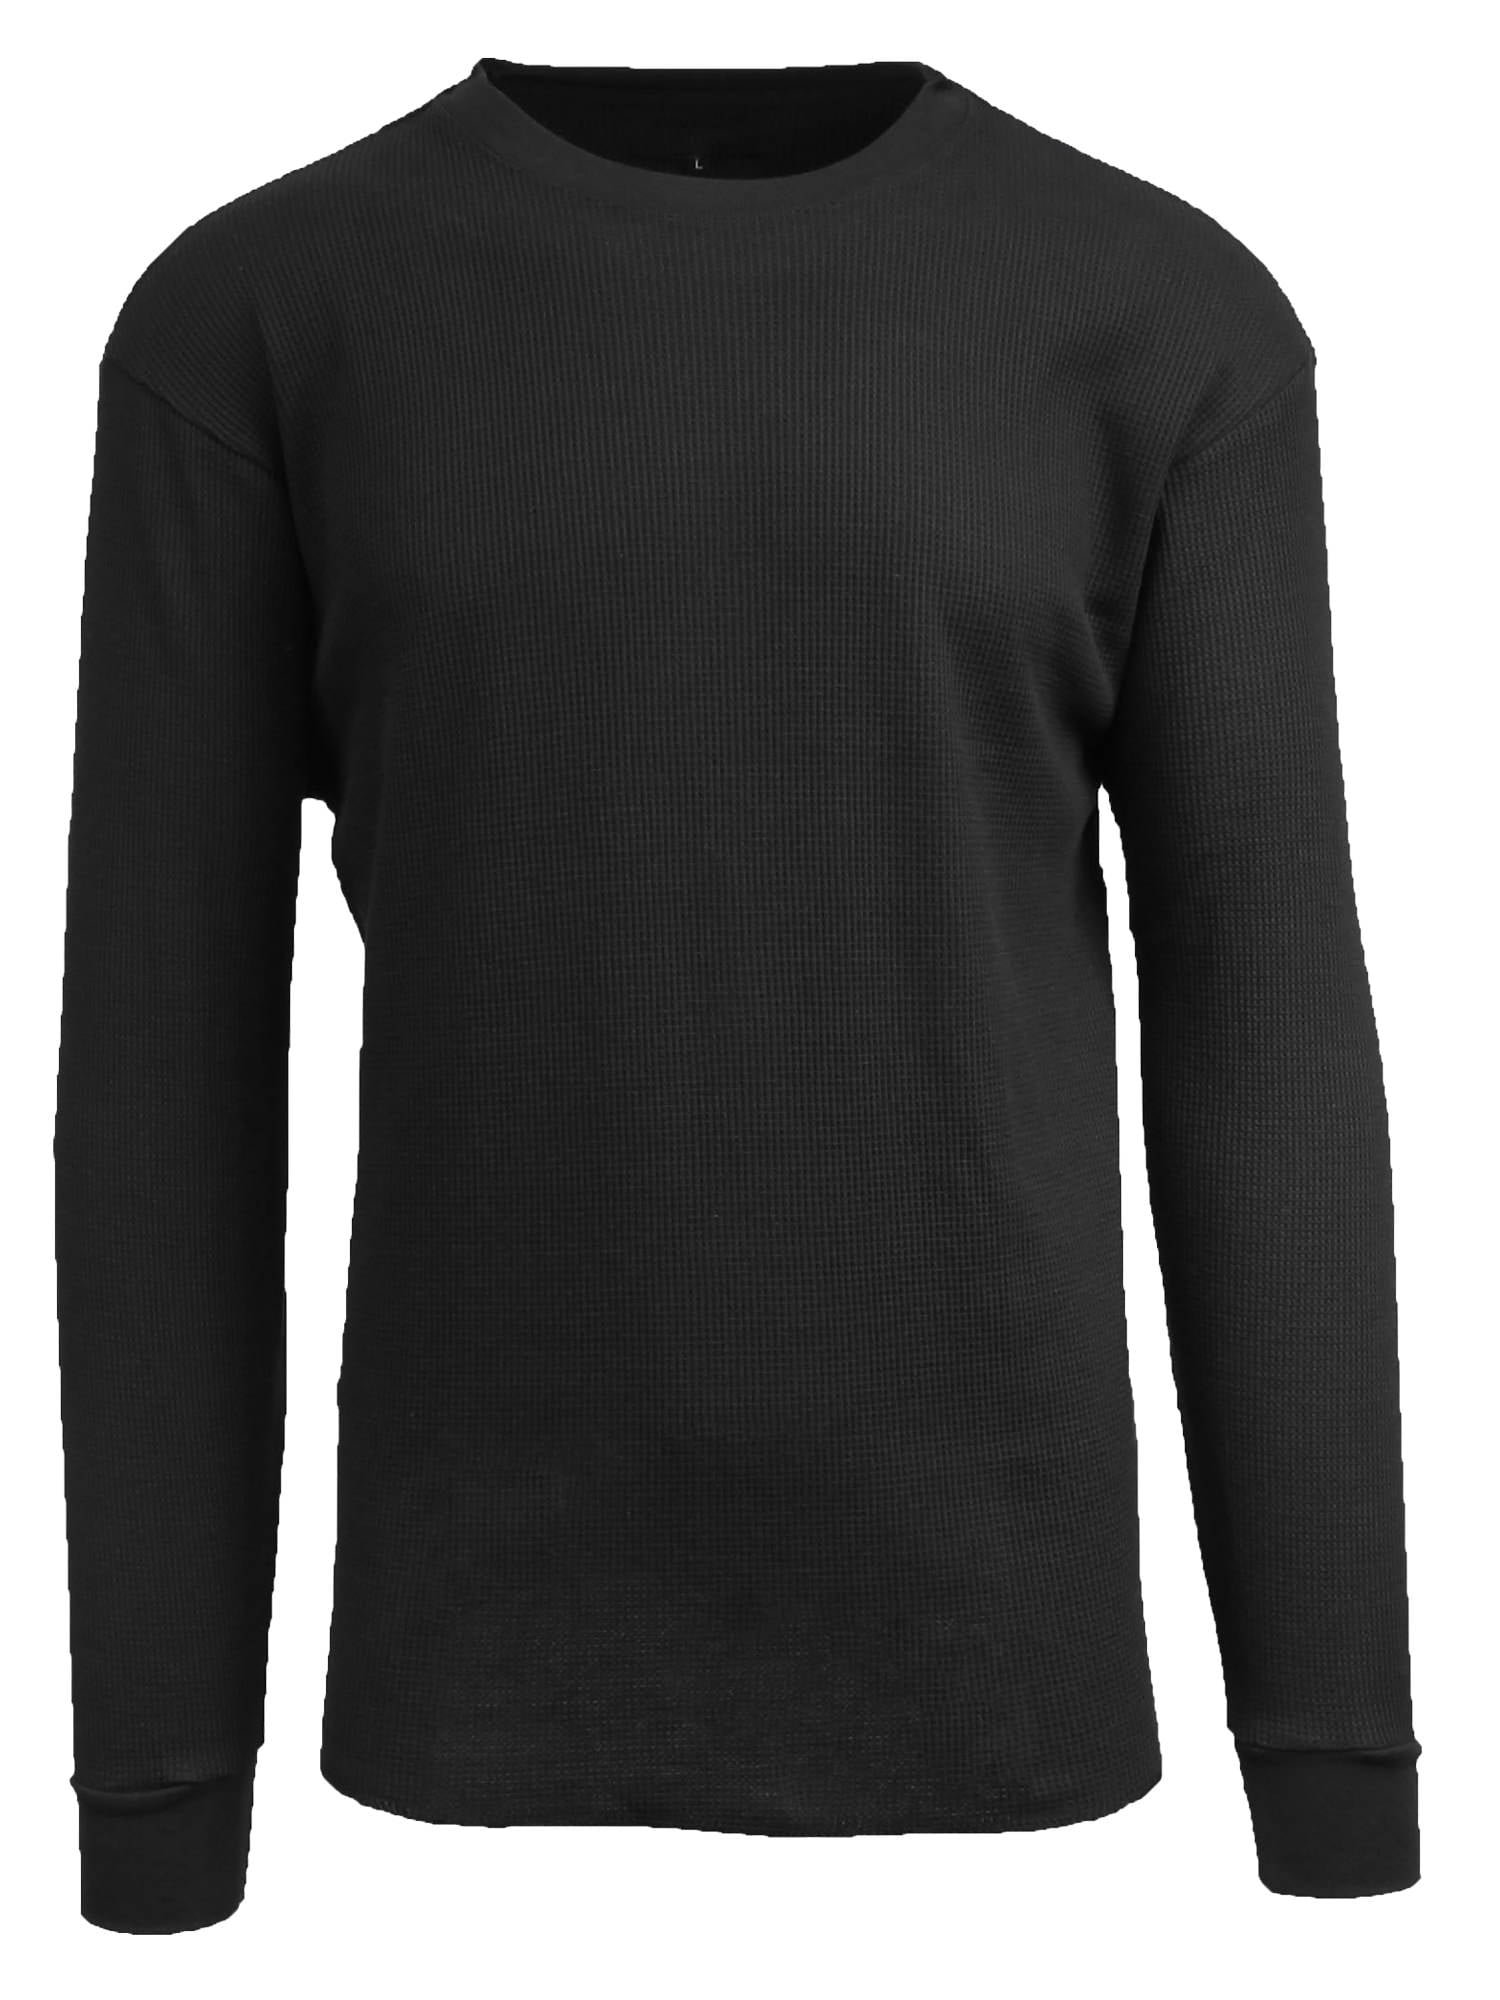 GBH Men's Long Sleeve Classic Thermal Shirts Upto 5XL - Walmart.com